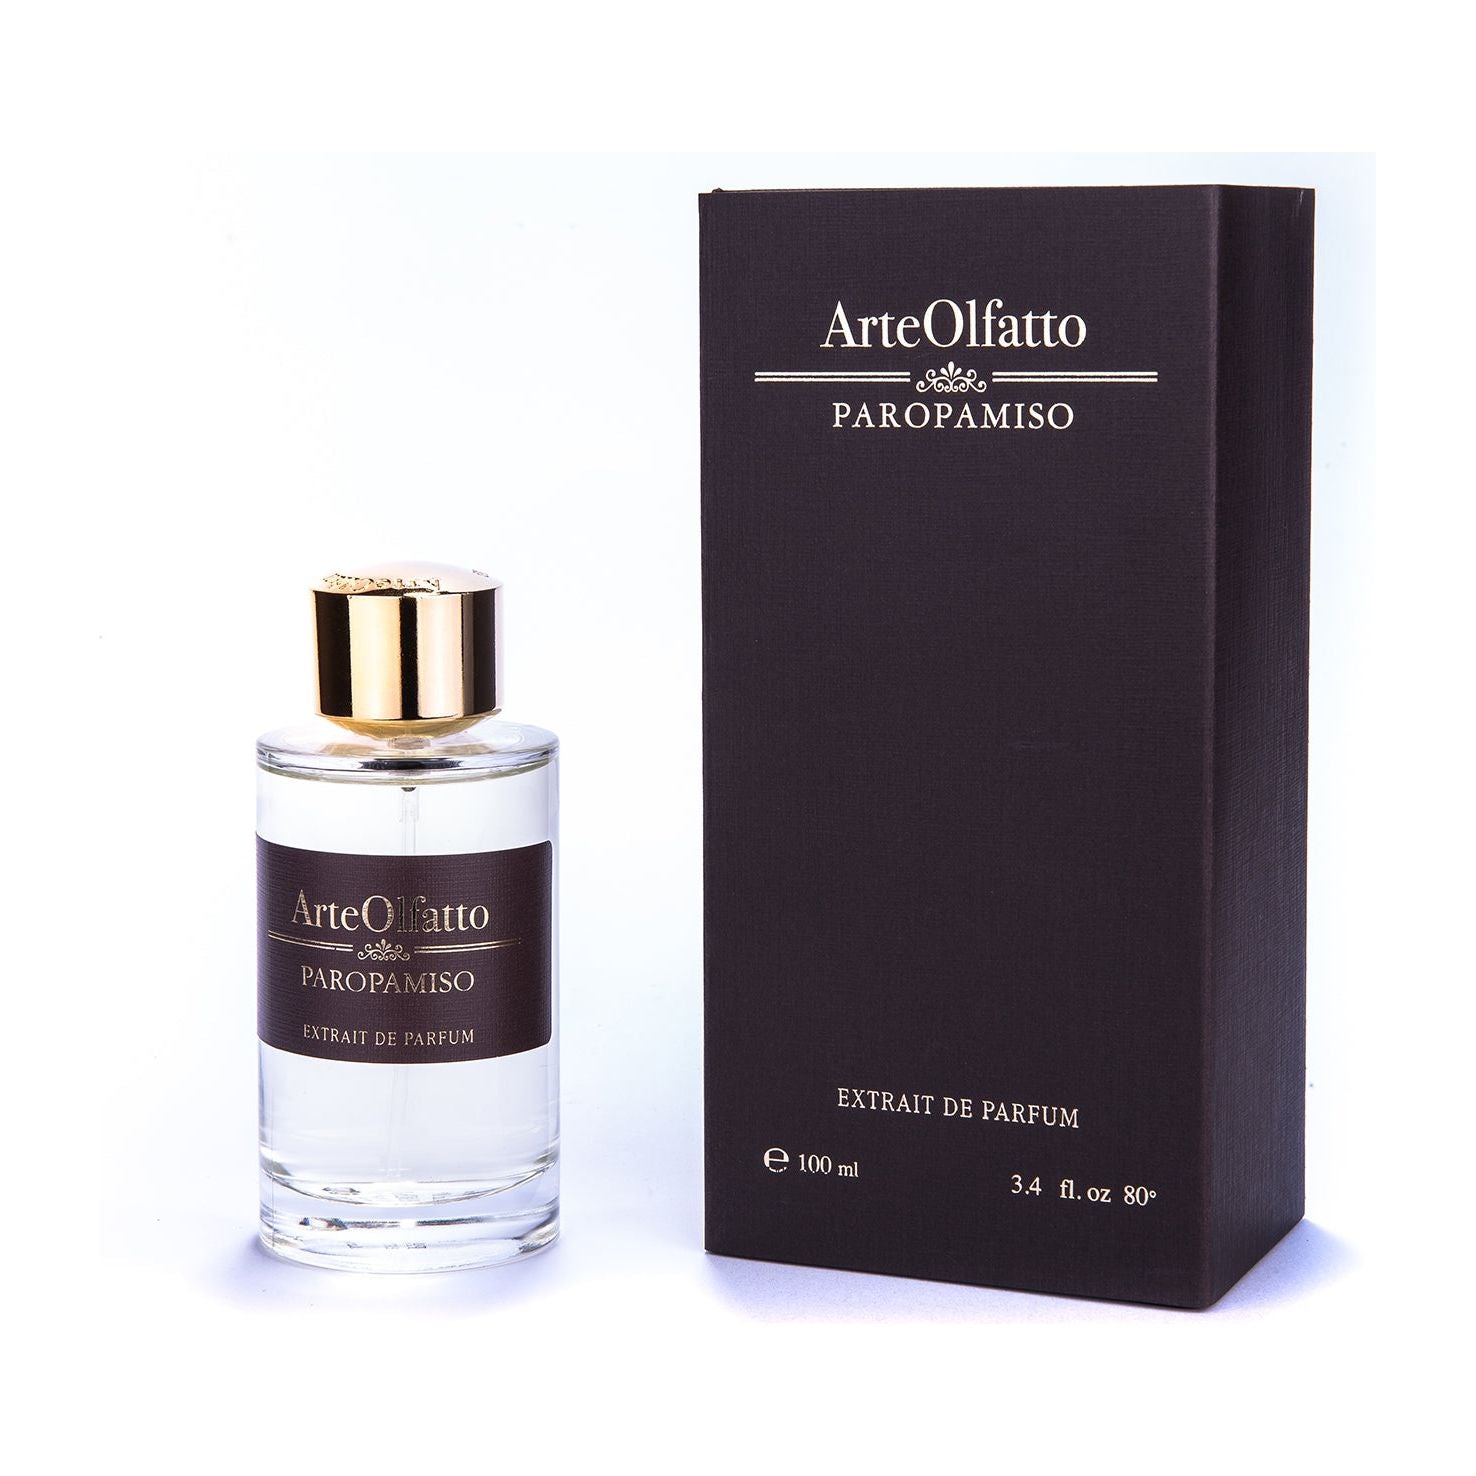 ArteOlfatto - Paropamiso - Extrait de Parfum